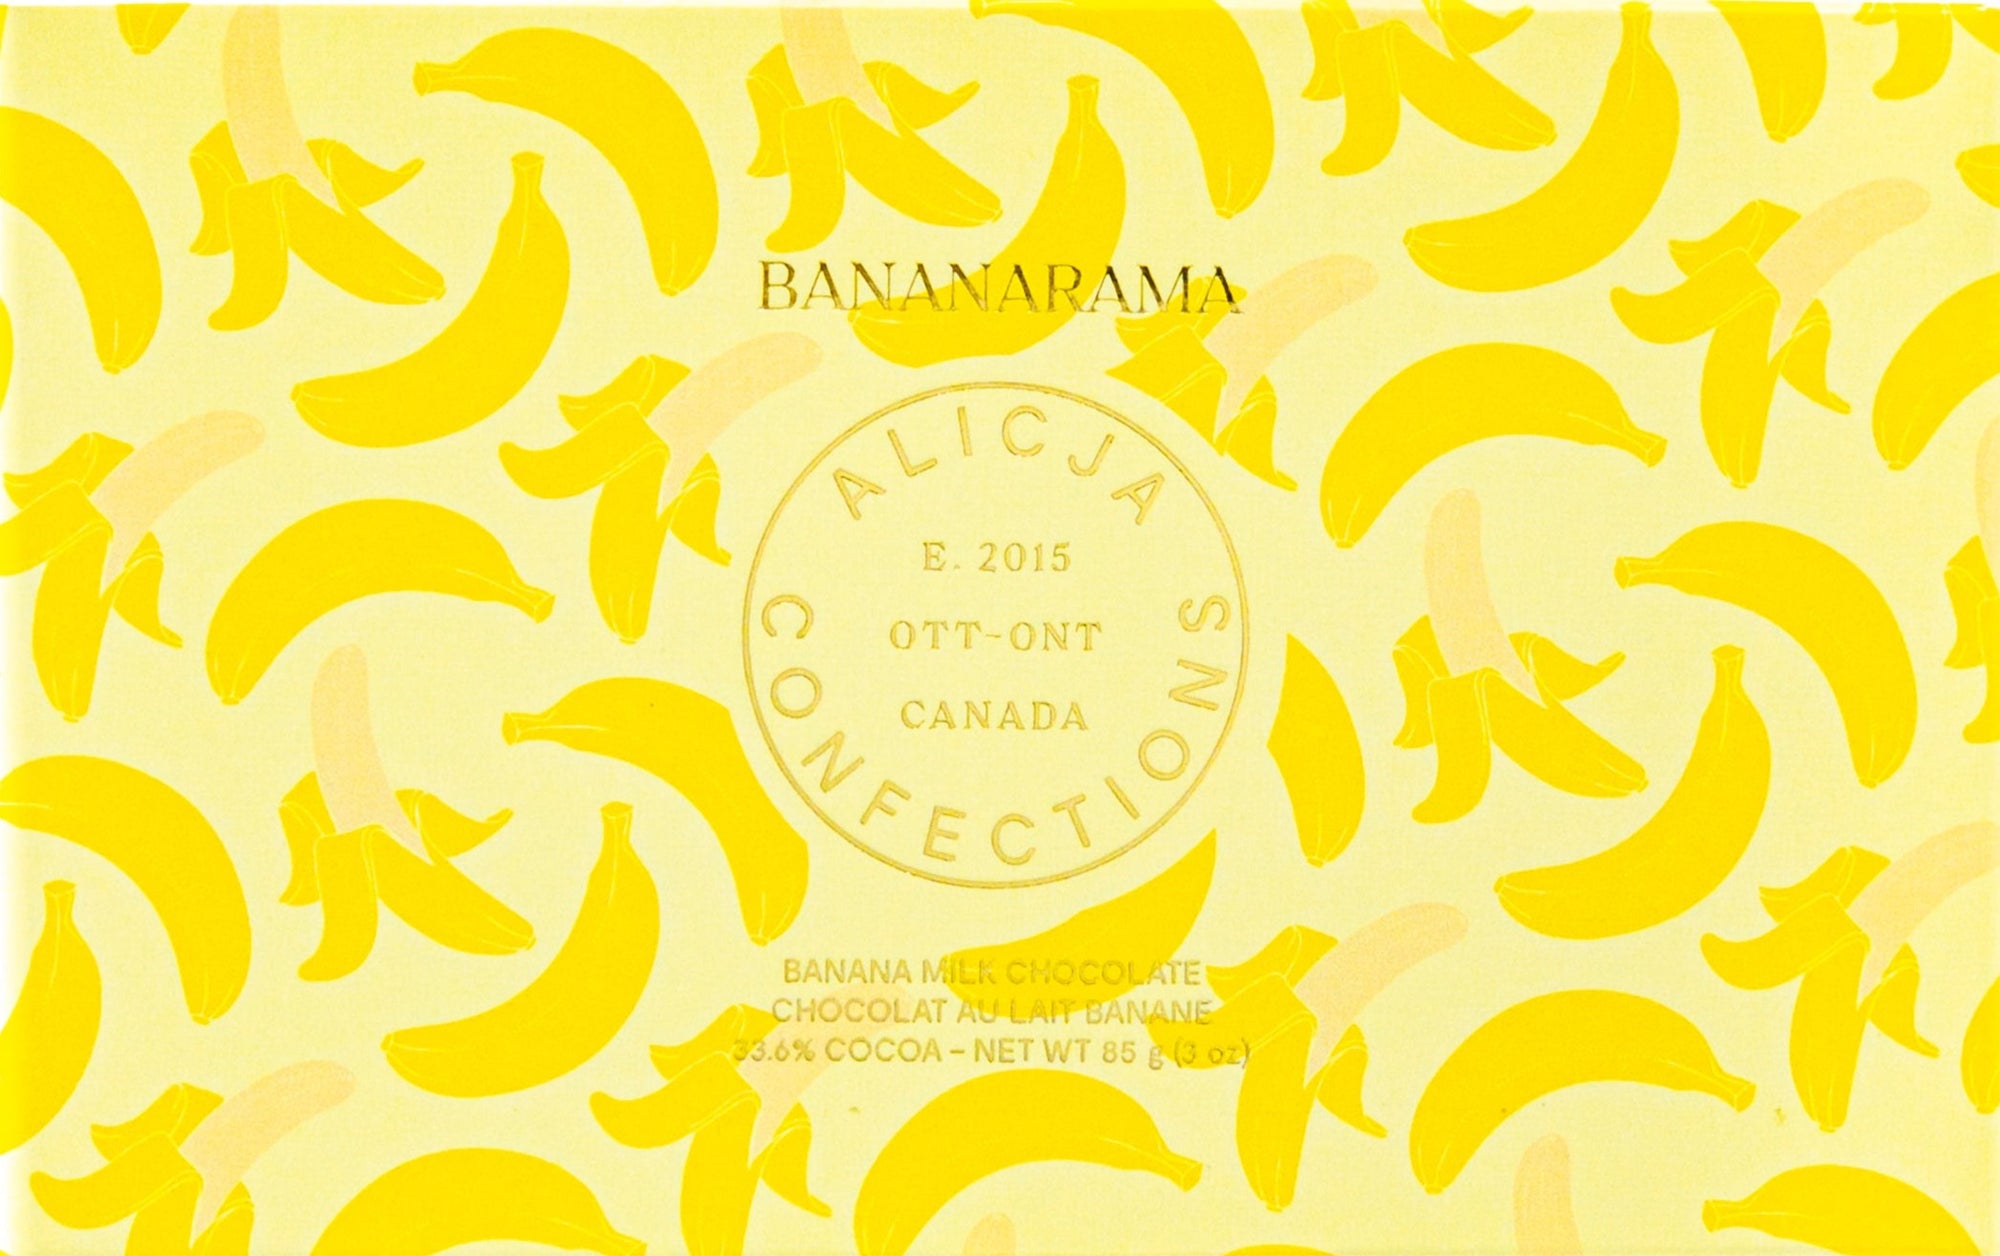 Bananarama • Banana 33.6% Milk Chocolate